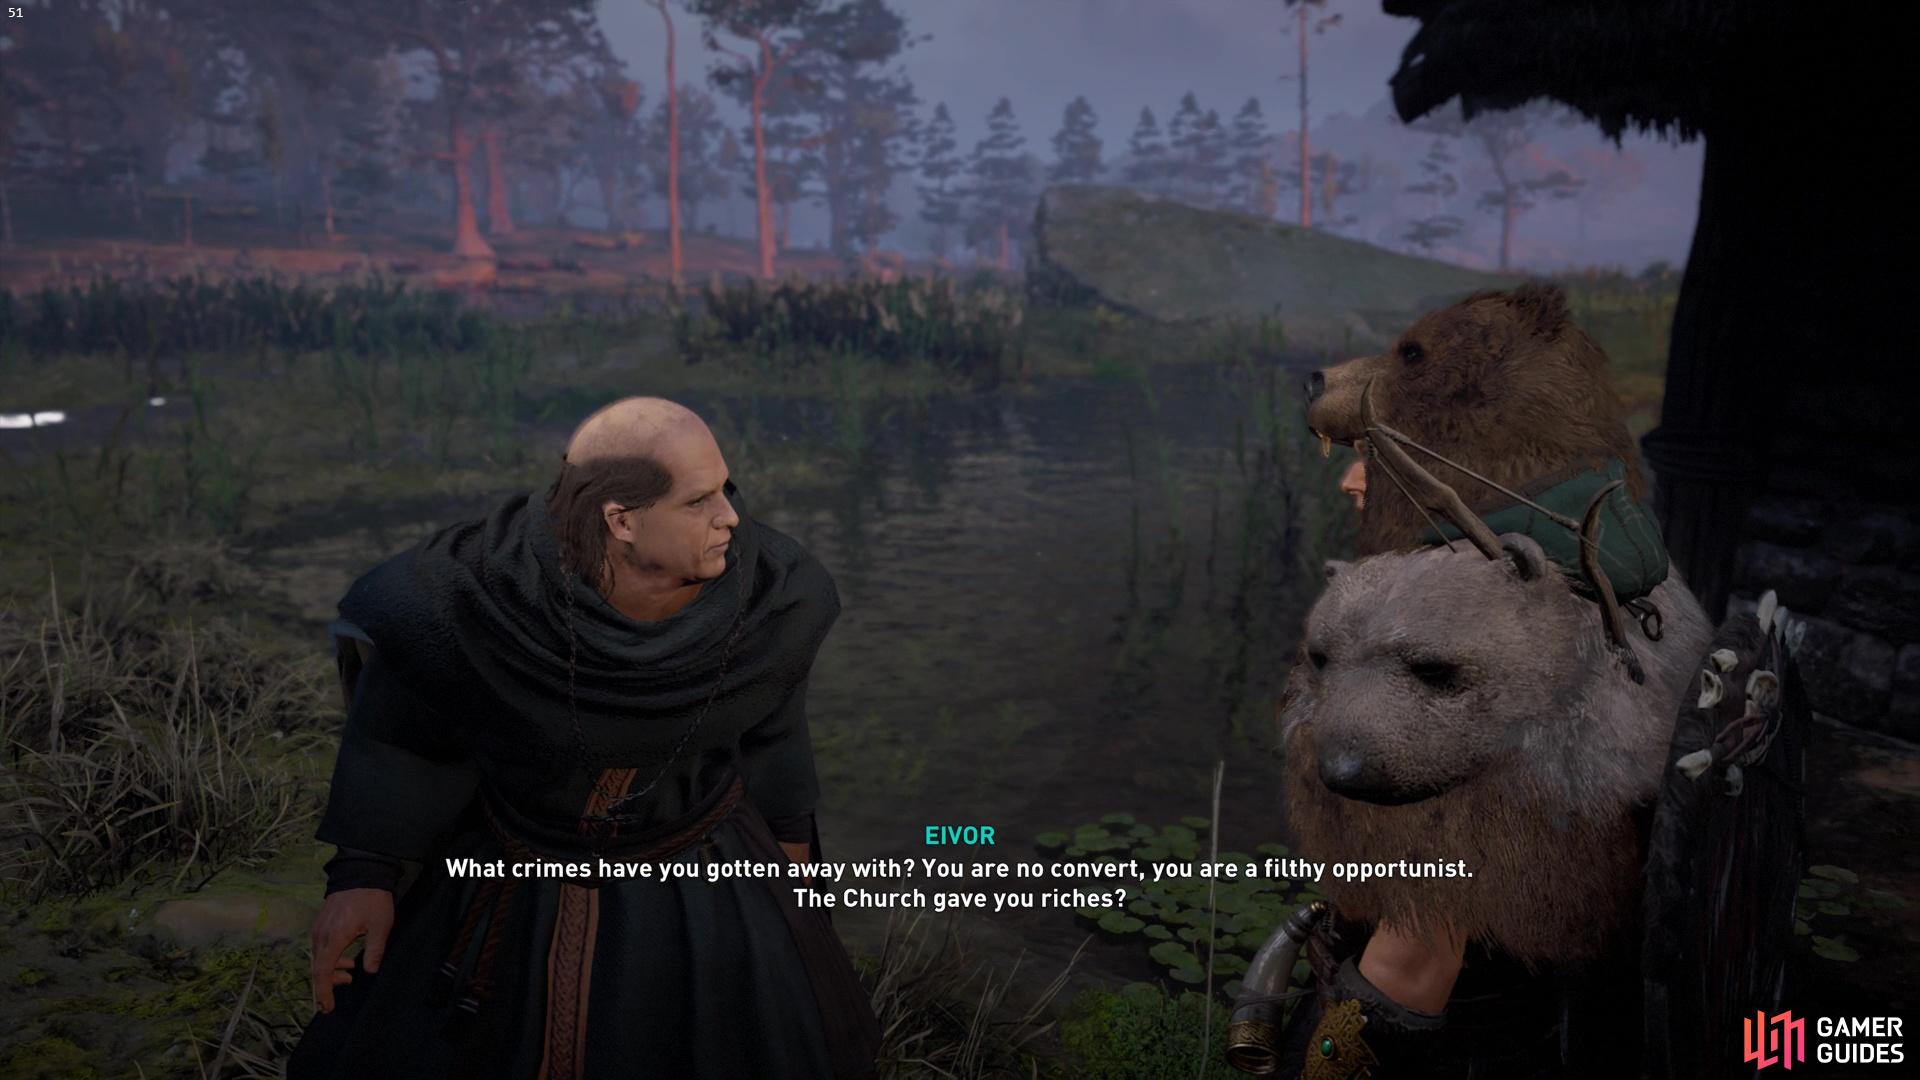 Then, confront the Monk about his evil deeds. 